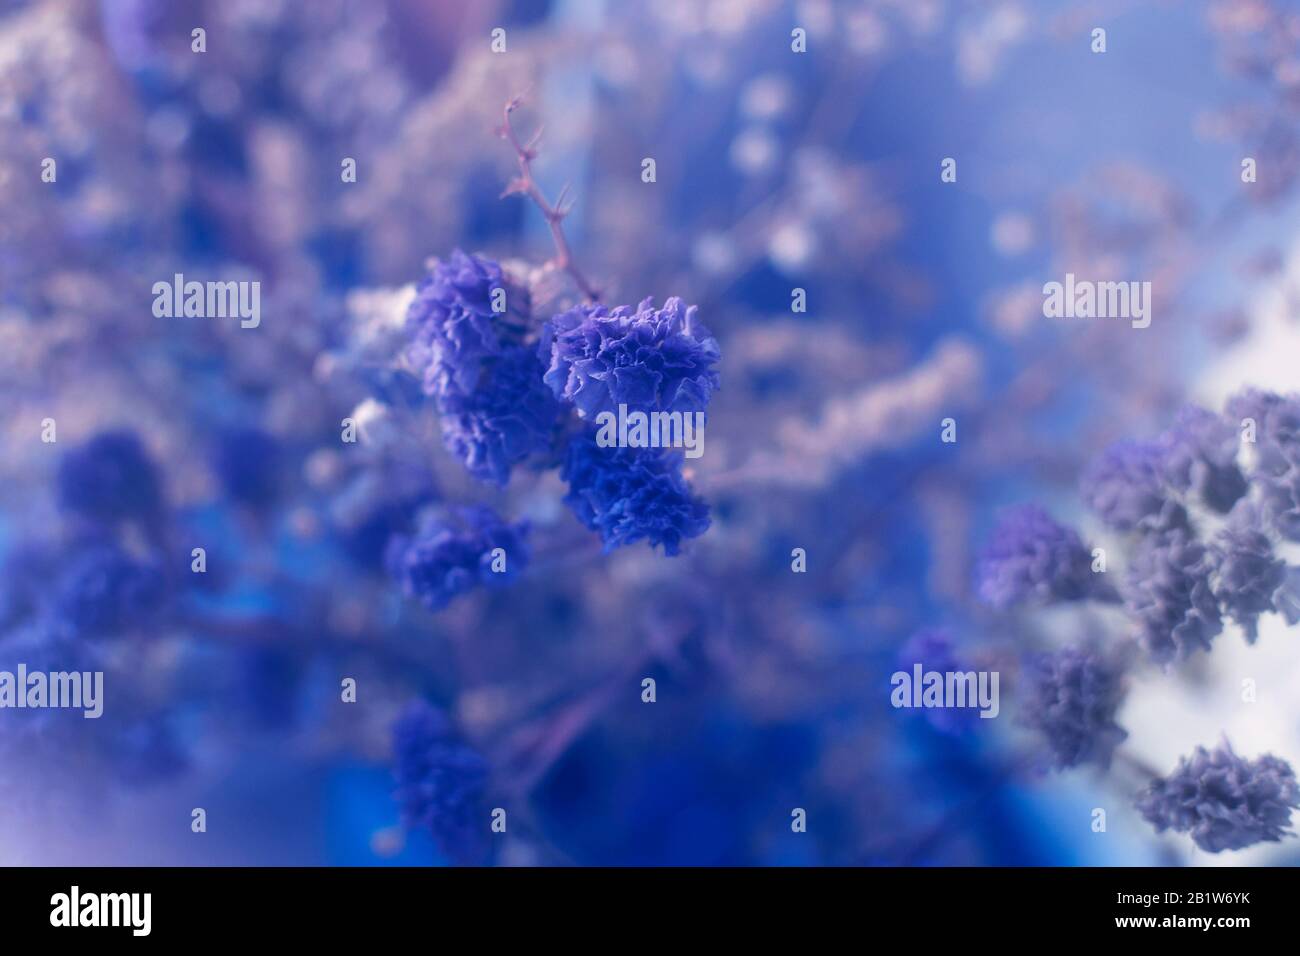 Blue dry flowers on window, soft focus Stock Photo